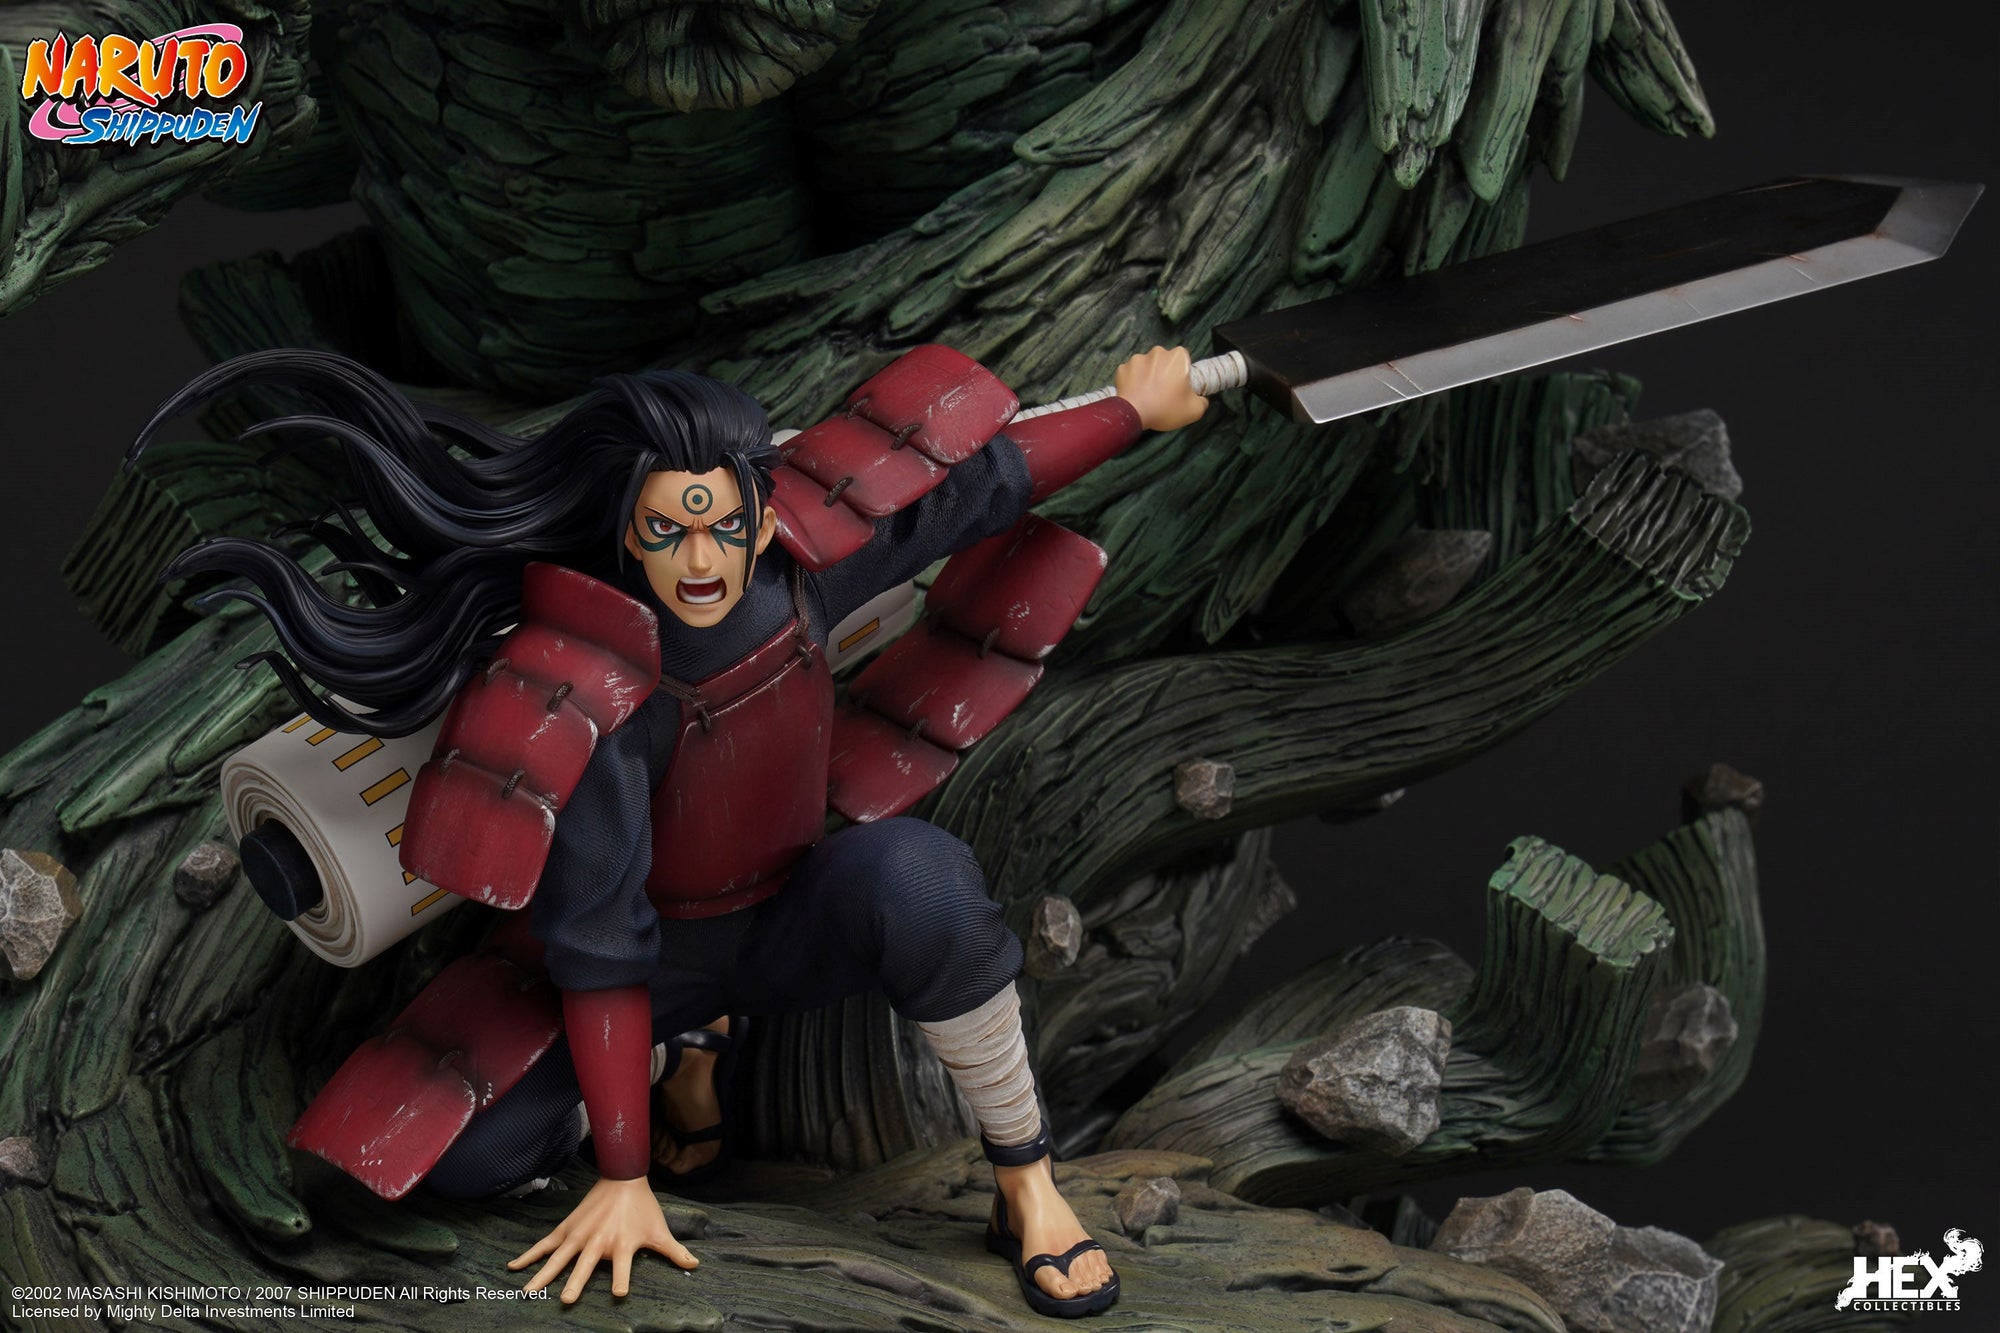 Naruto: Shippuden God of Shinobi Hashirama Senju Epic Scale Limited Edition  1:6 Scale Statue